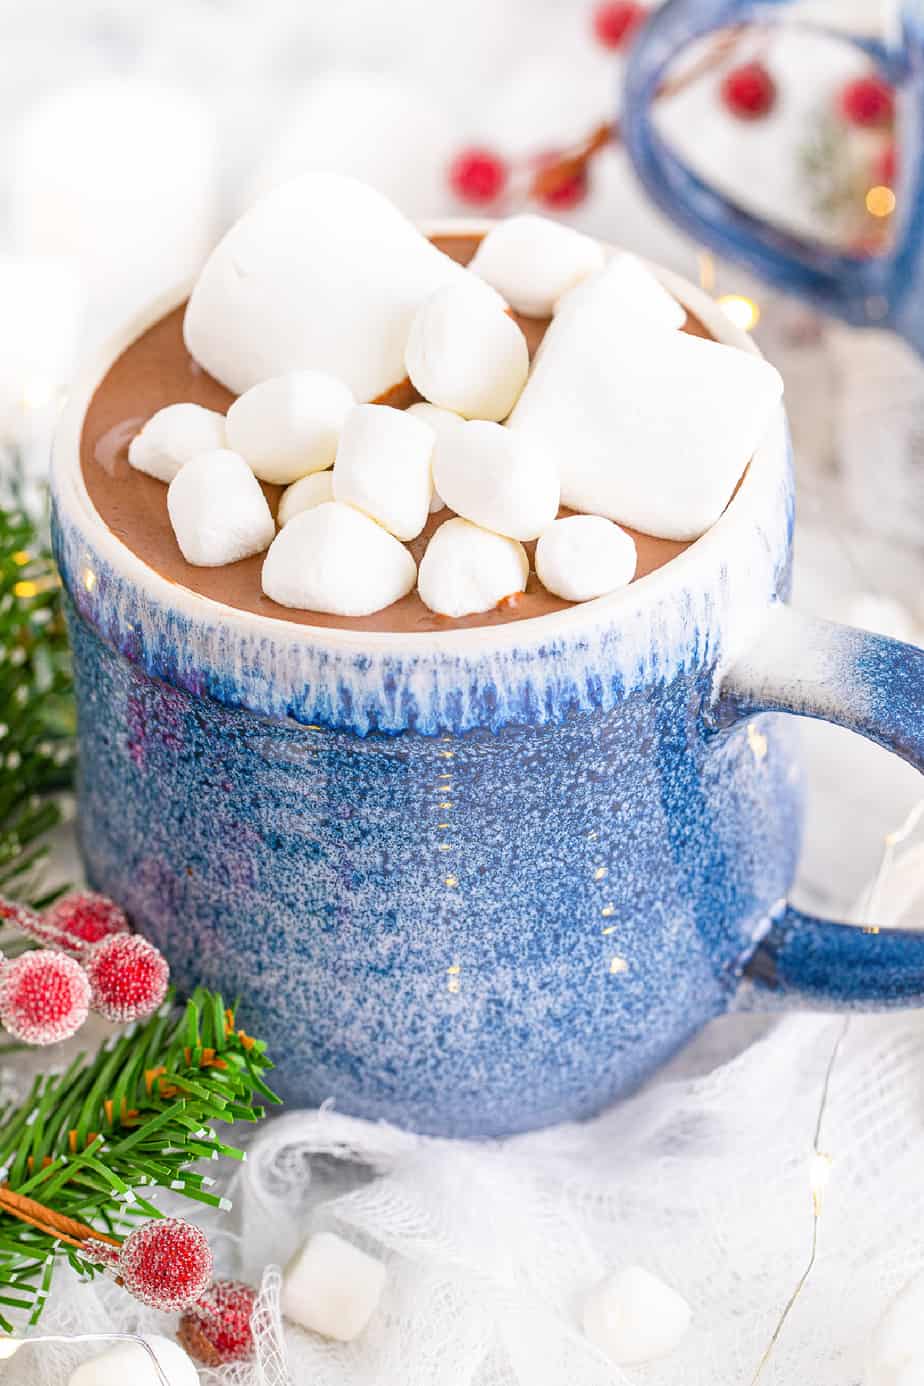 Hot chocolate in a mug close up full of marshmallows